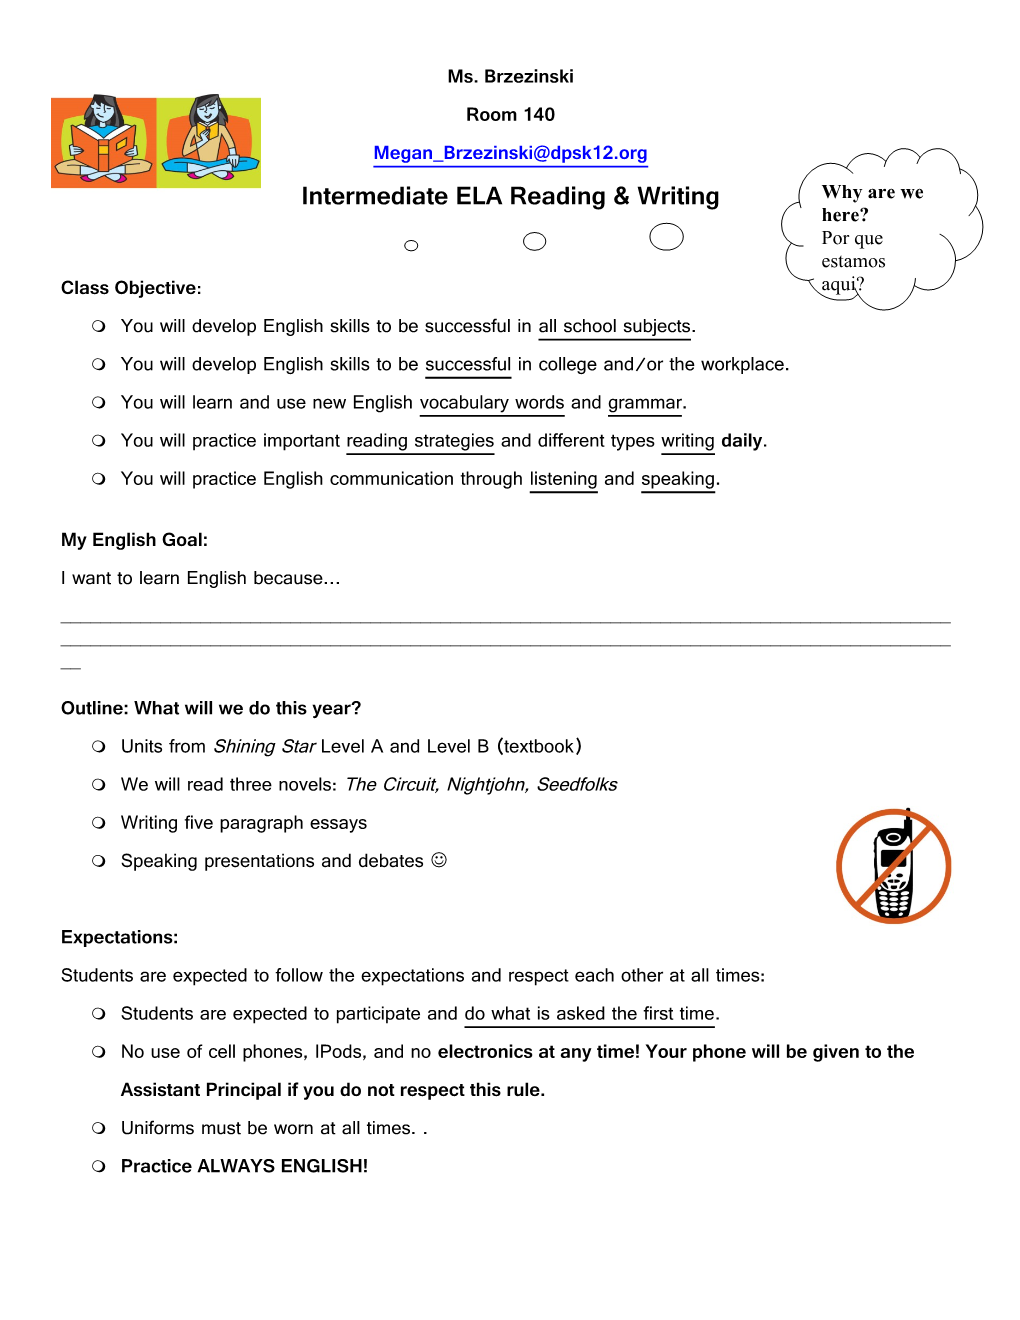 Intermediate ELA Reading & Writing